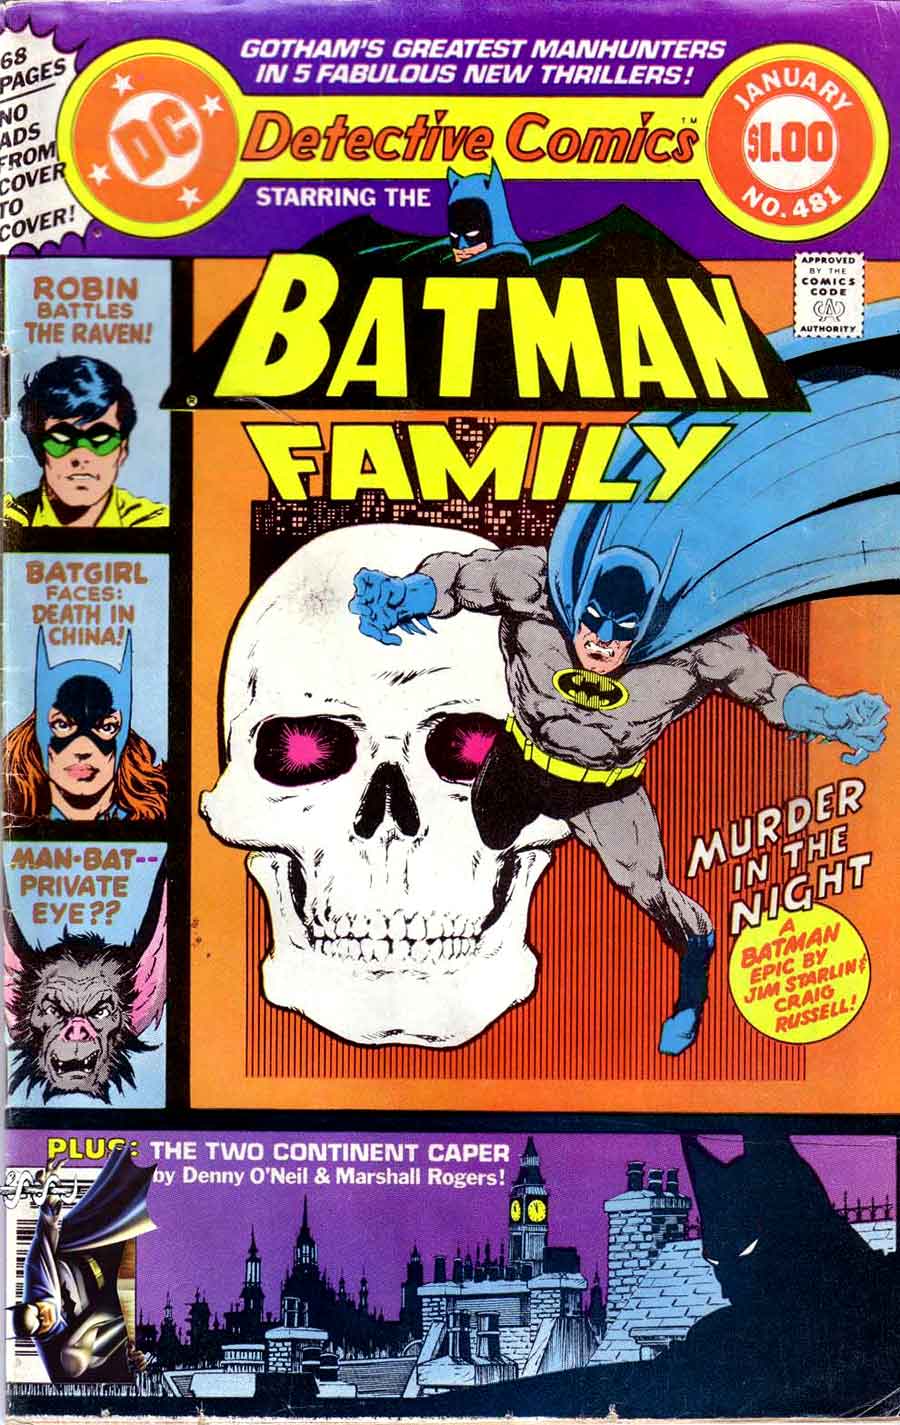 Detective Comics v1 #481 dc comic book cover art by Jim Starlin